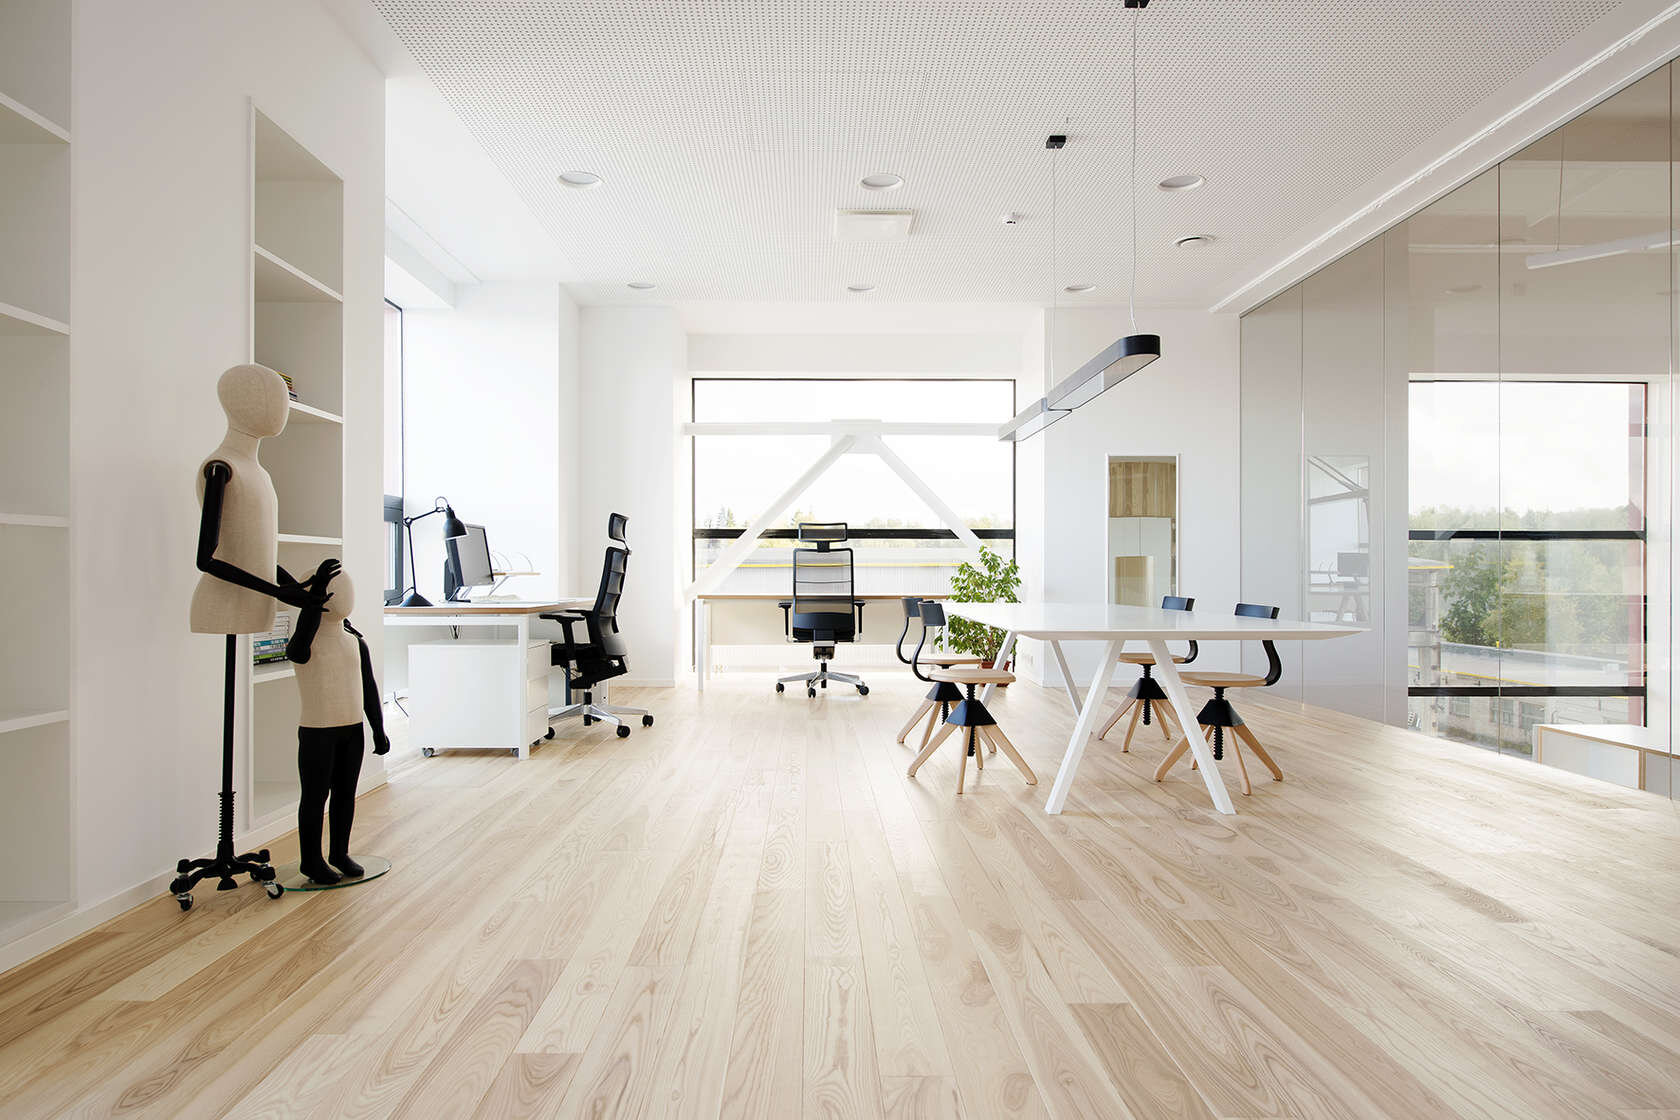 Z North Studio - Commercial & Residential Interior Design - Office - zn-s (53).jpg